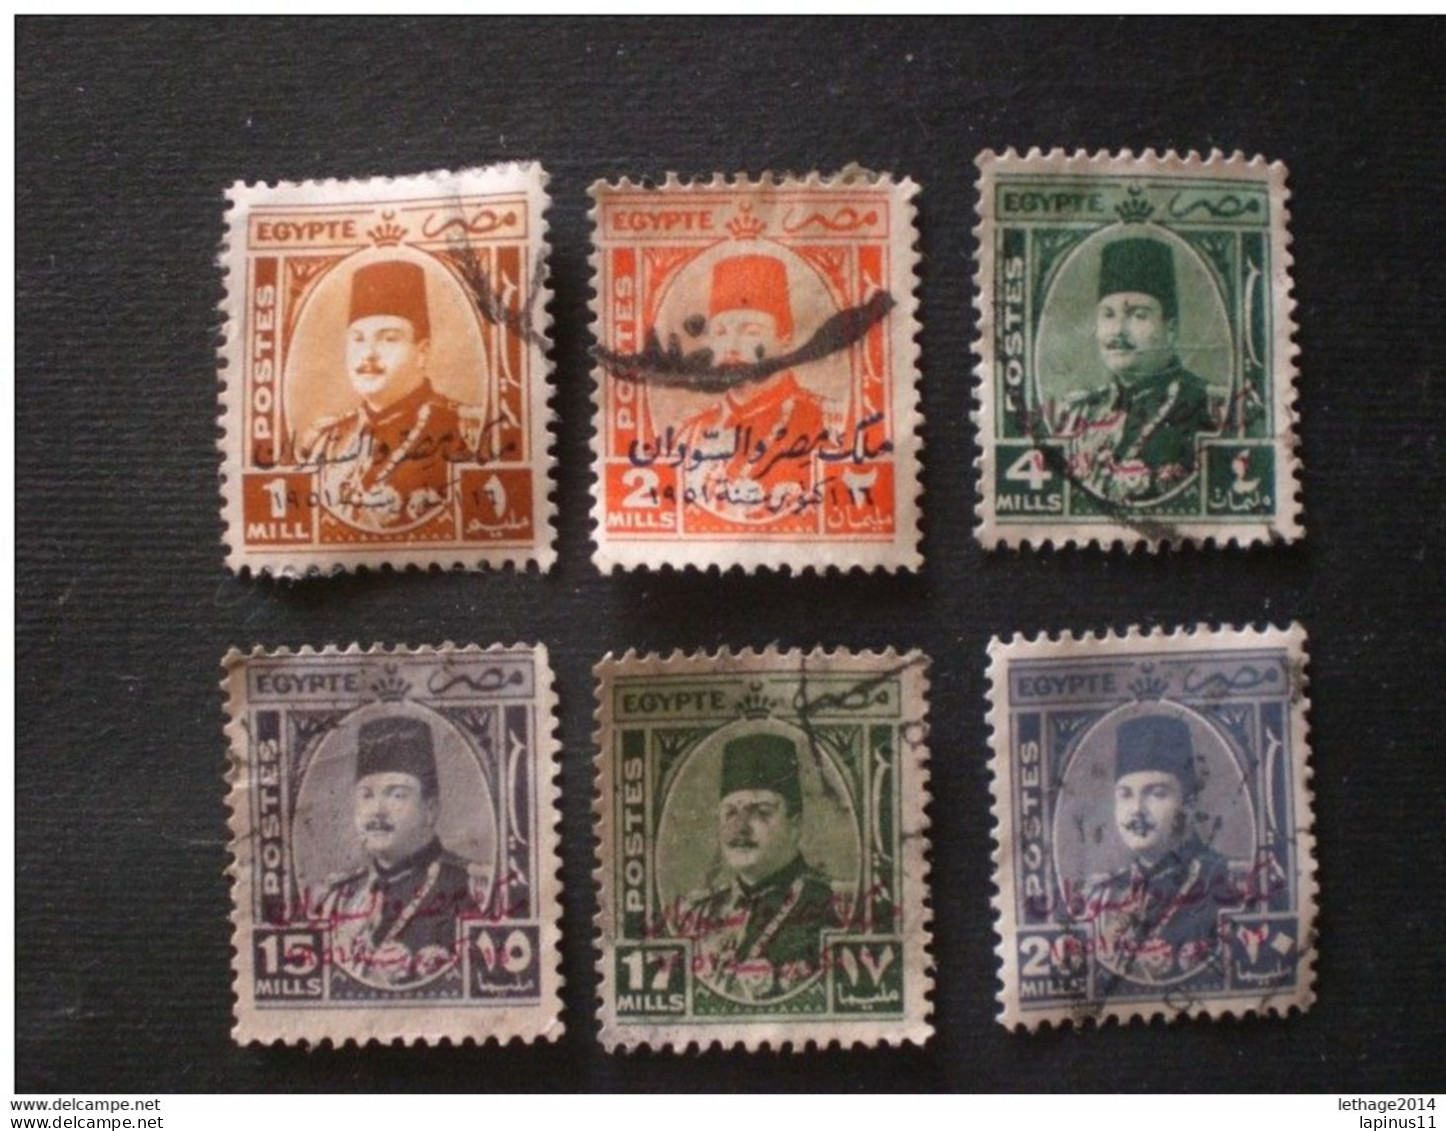 EGYPT 1948 King Farouk - Egypt Postage Stamps Of 1951 Overprinted "SUDAN" In Arabic RARE - Usati